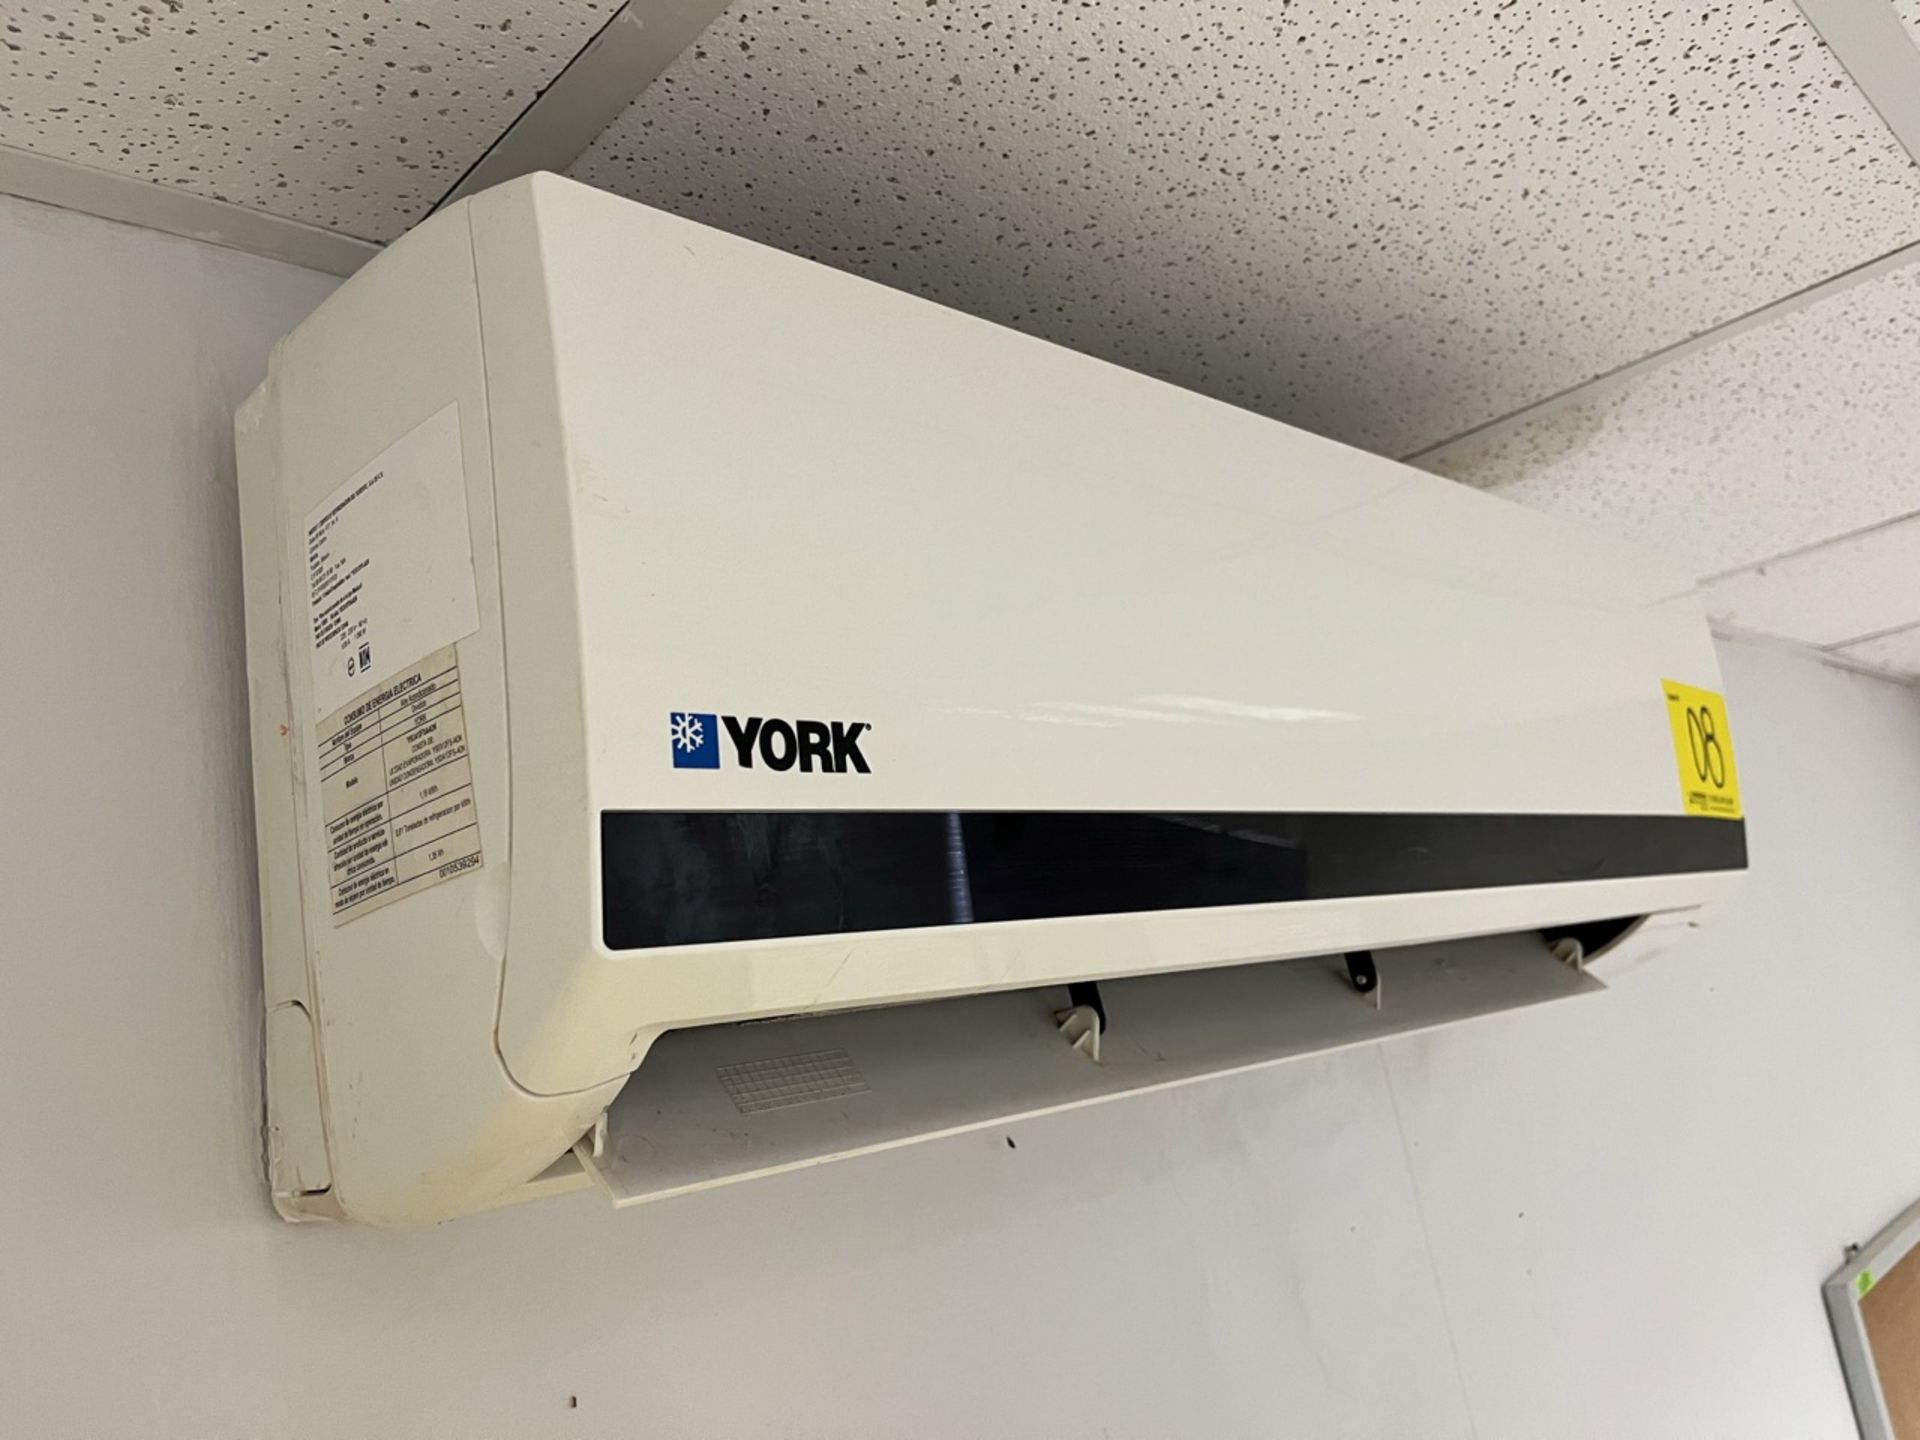 York minisplit air conditioner with control, Model YSEA12FS-ADK, Series 100001010140290131, 220 Vol - Image 4 of 14